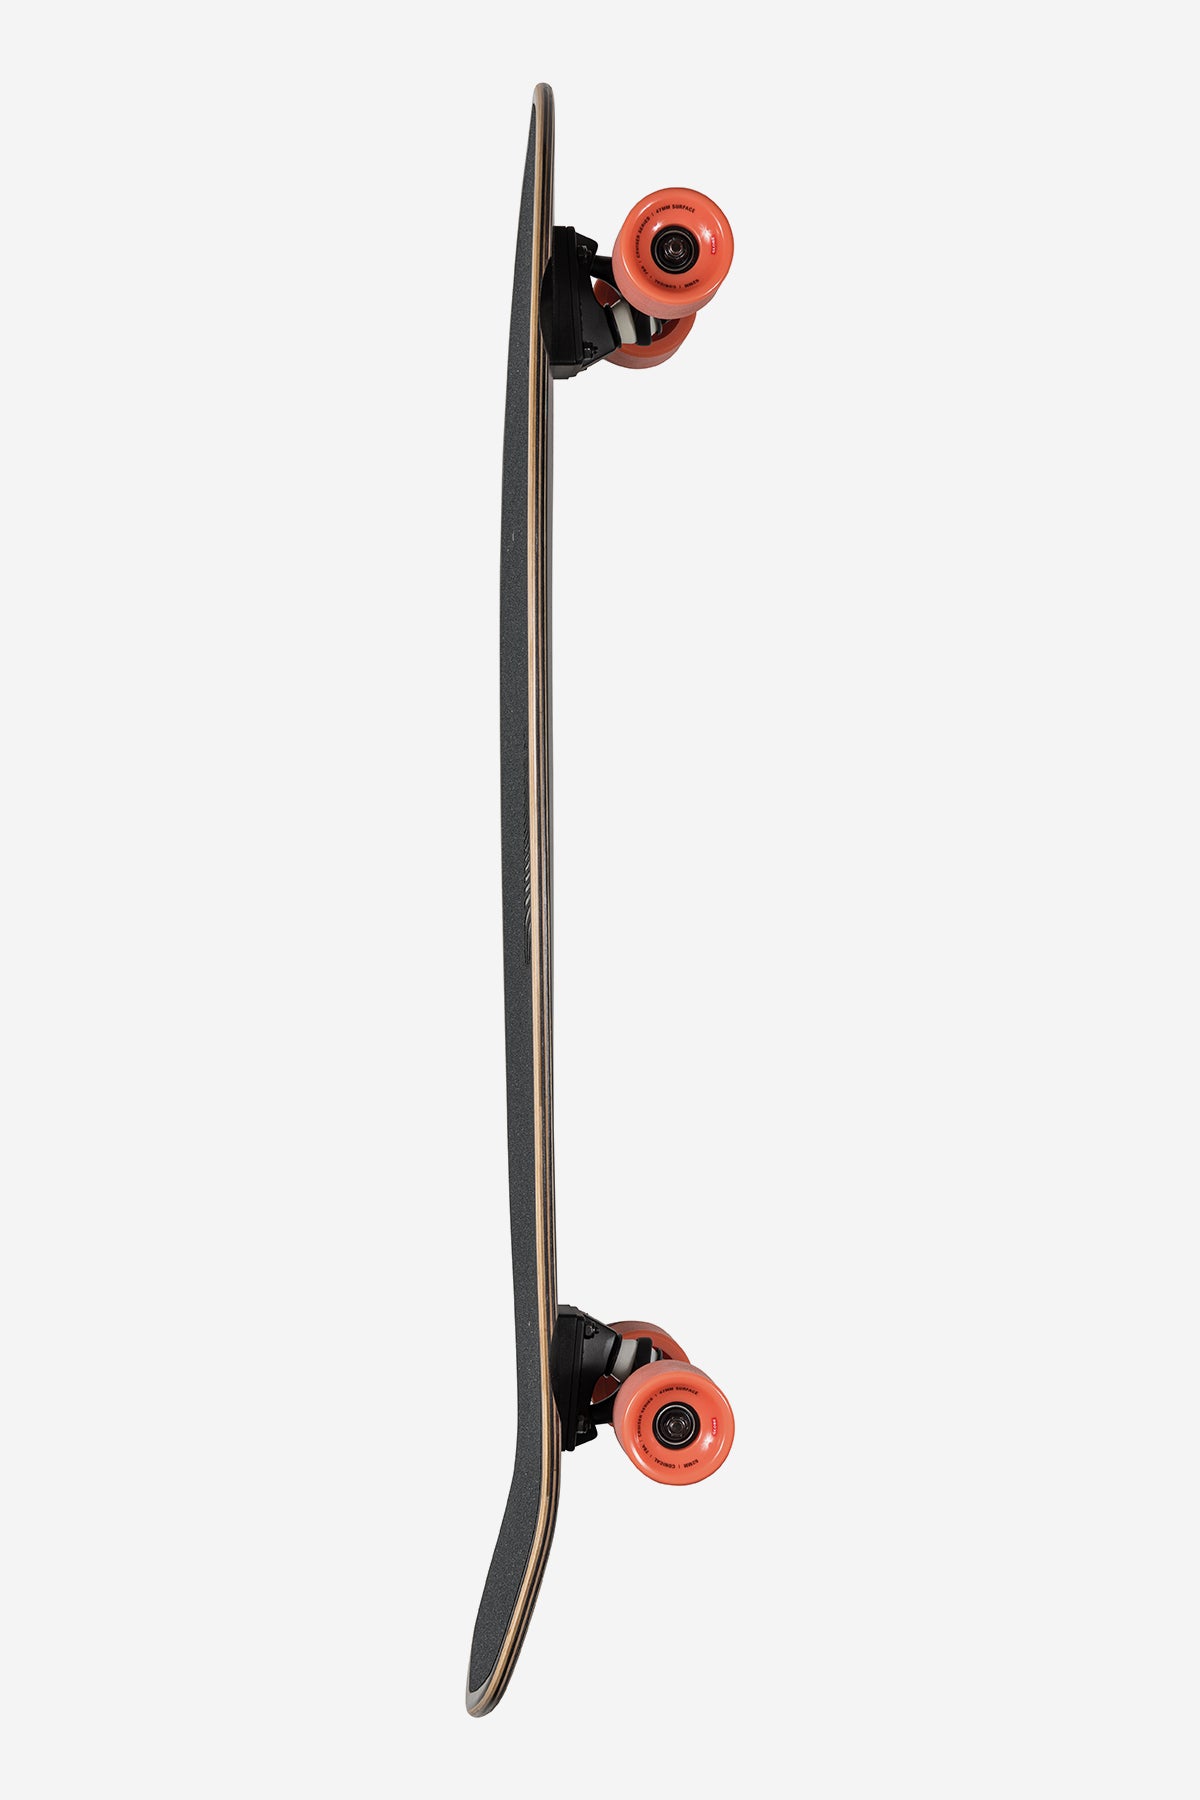 Blazer XL 36" Longboard - Black/Orange